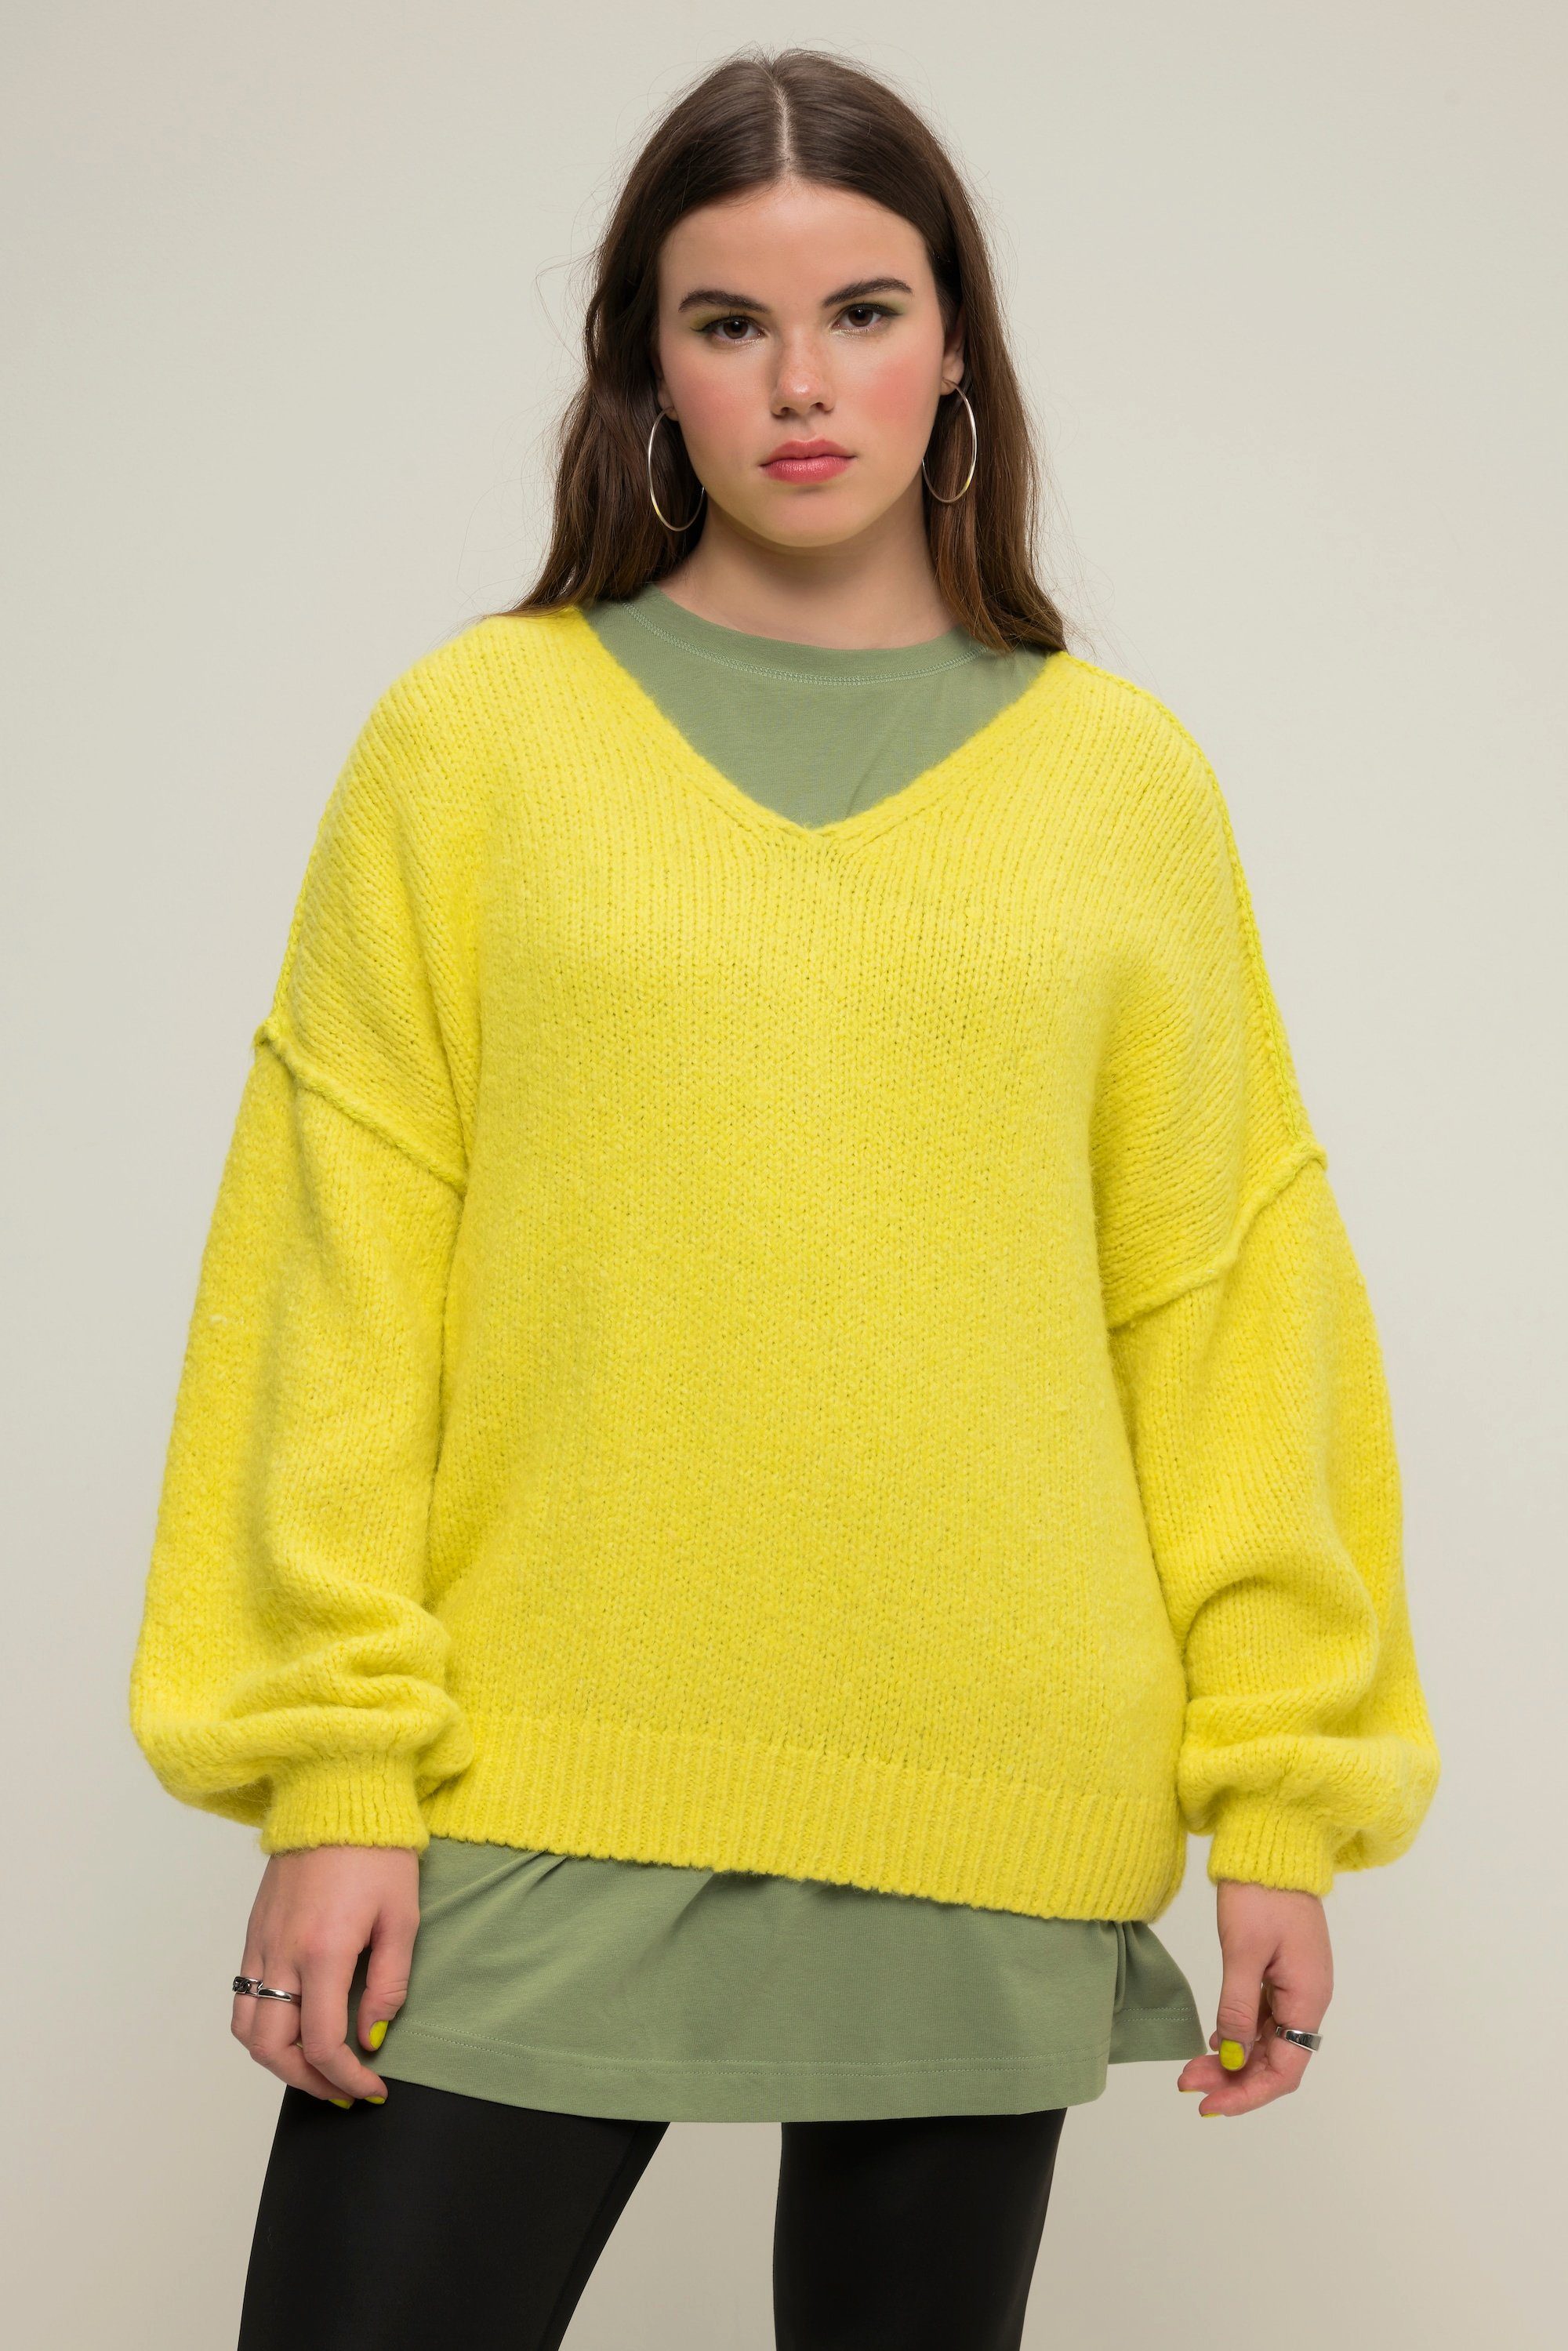 Studio Untold Fleecepullover Pullover V-Ausschnitt weiter Langarm oversized